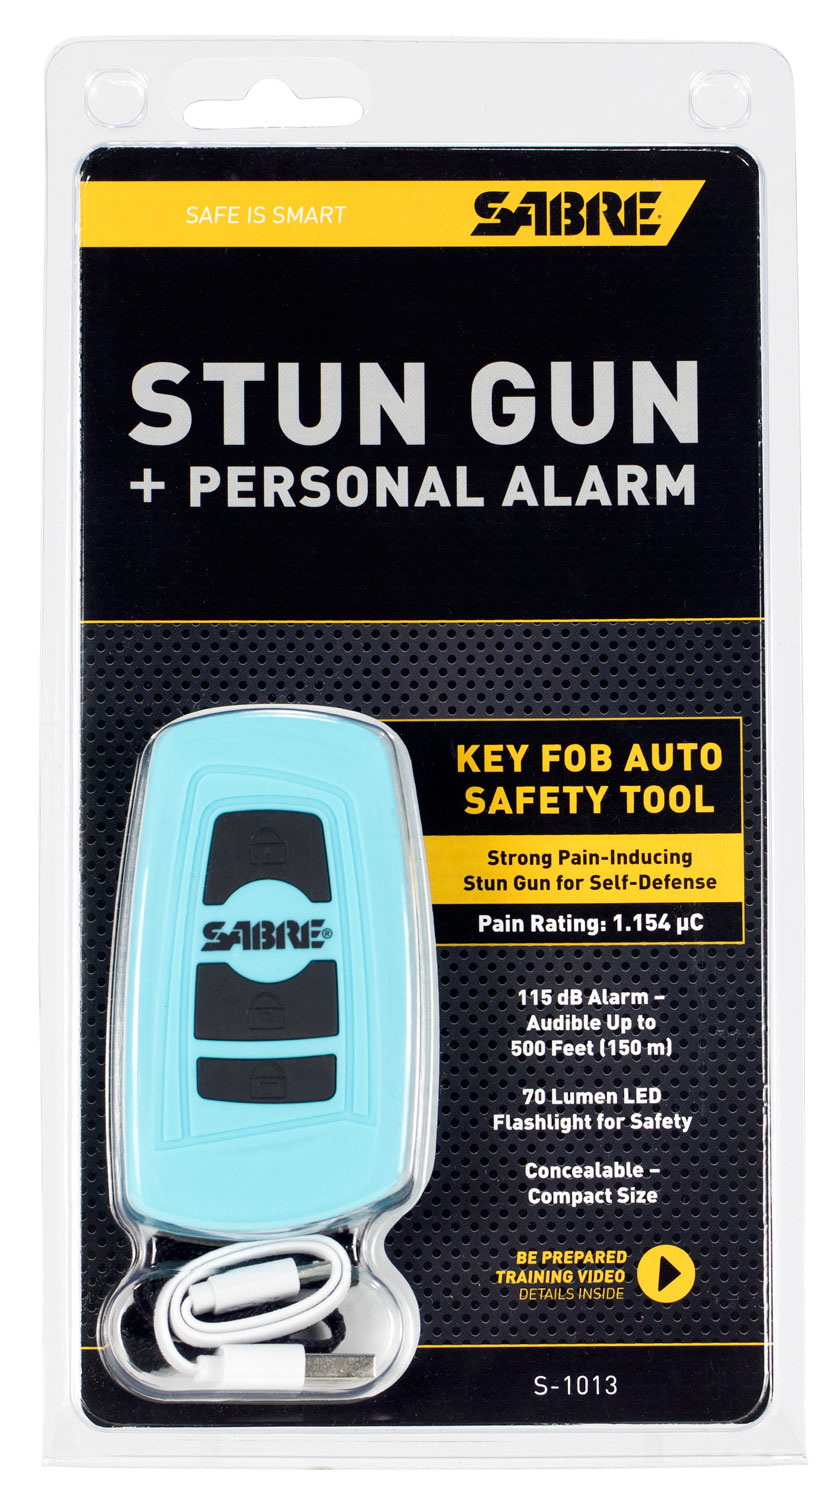 SAB KEYFOB STUN GUN TEAL - Accessories